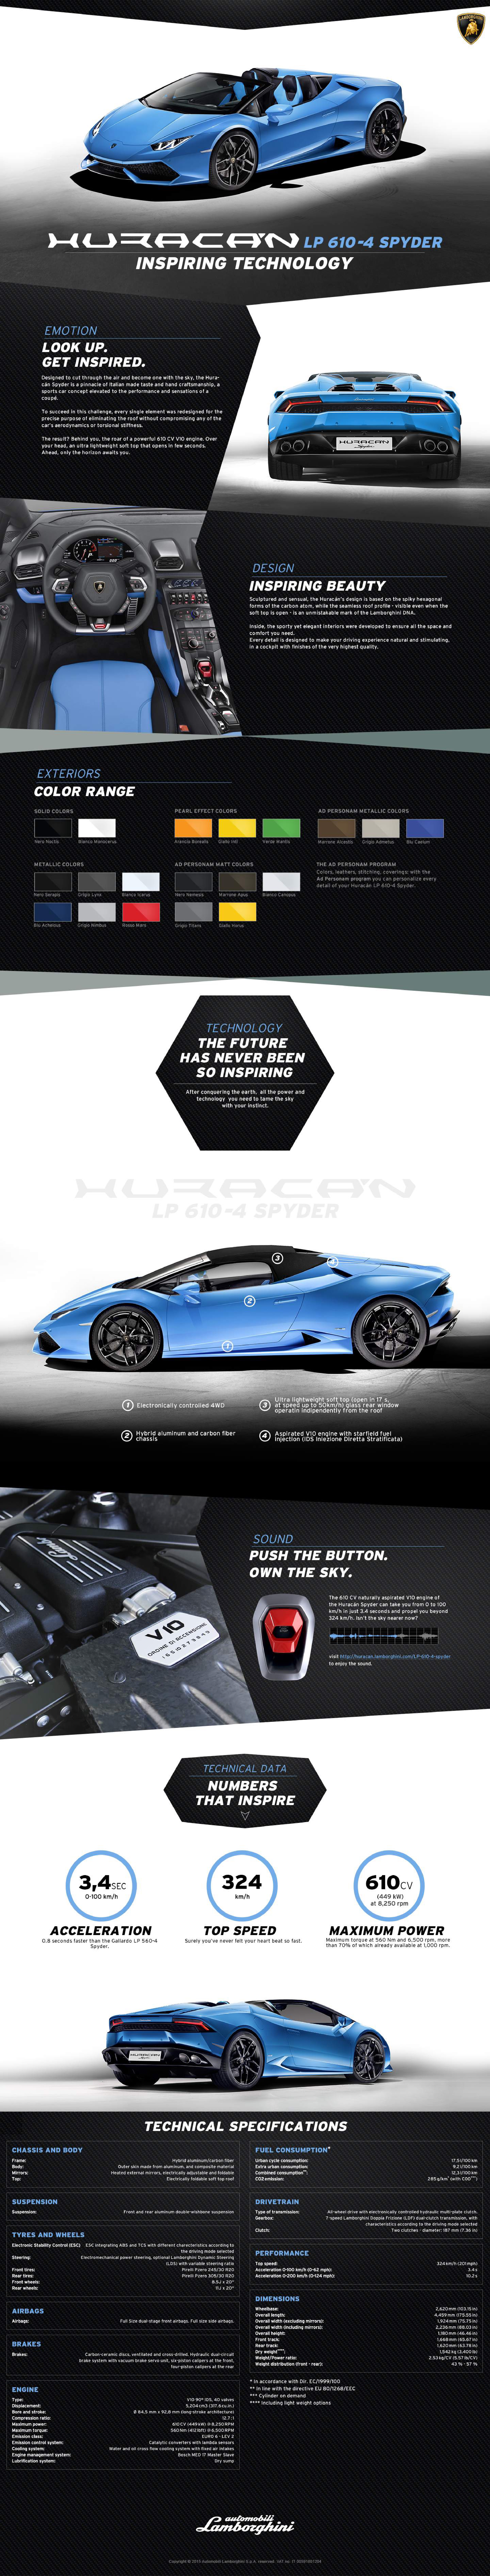 2016 Lamborghini Huracan LP 610-4 Spyder Brochure Page 1